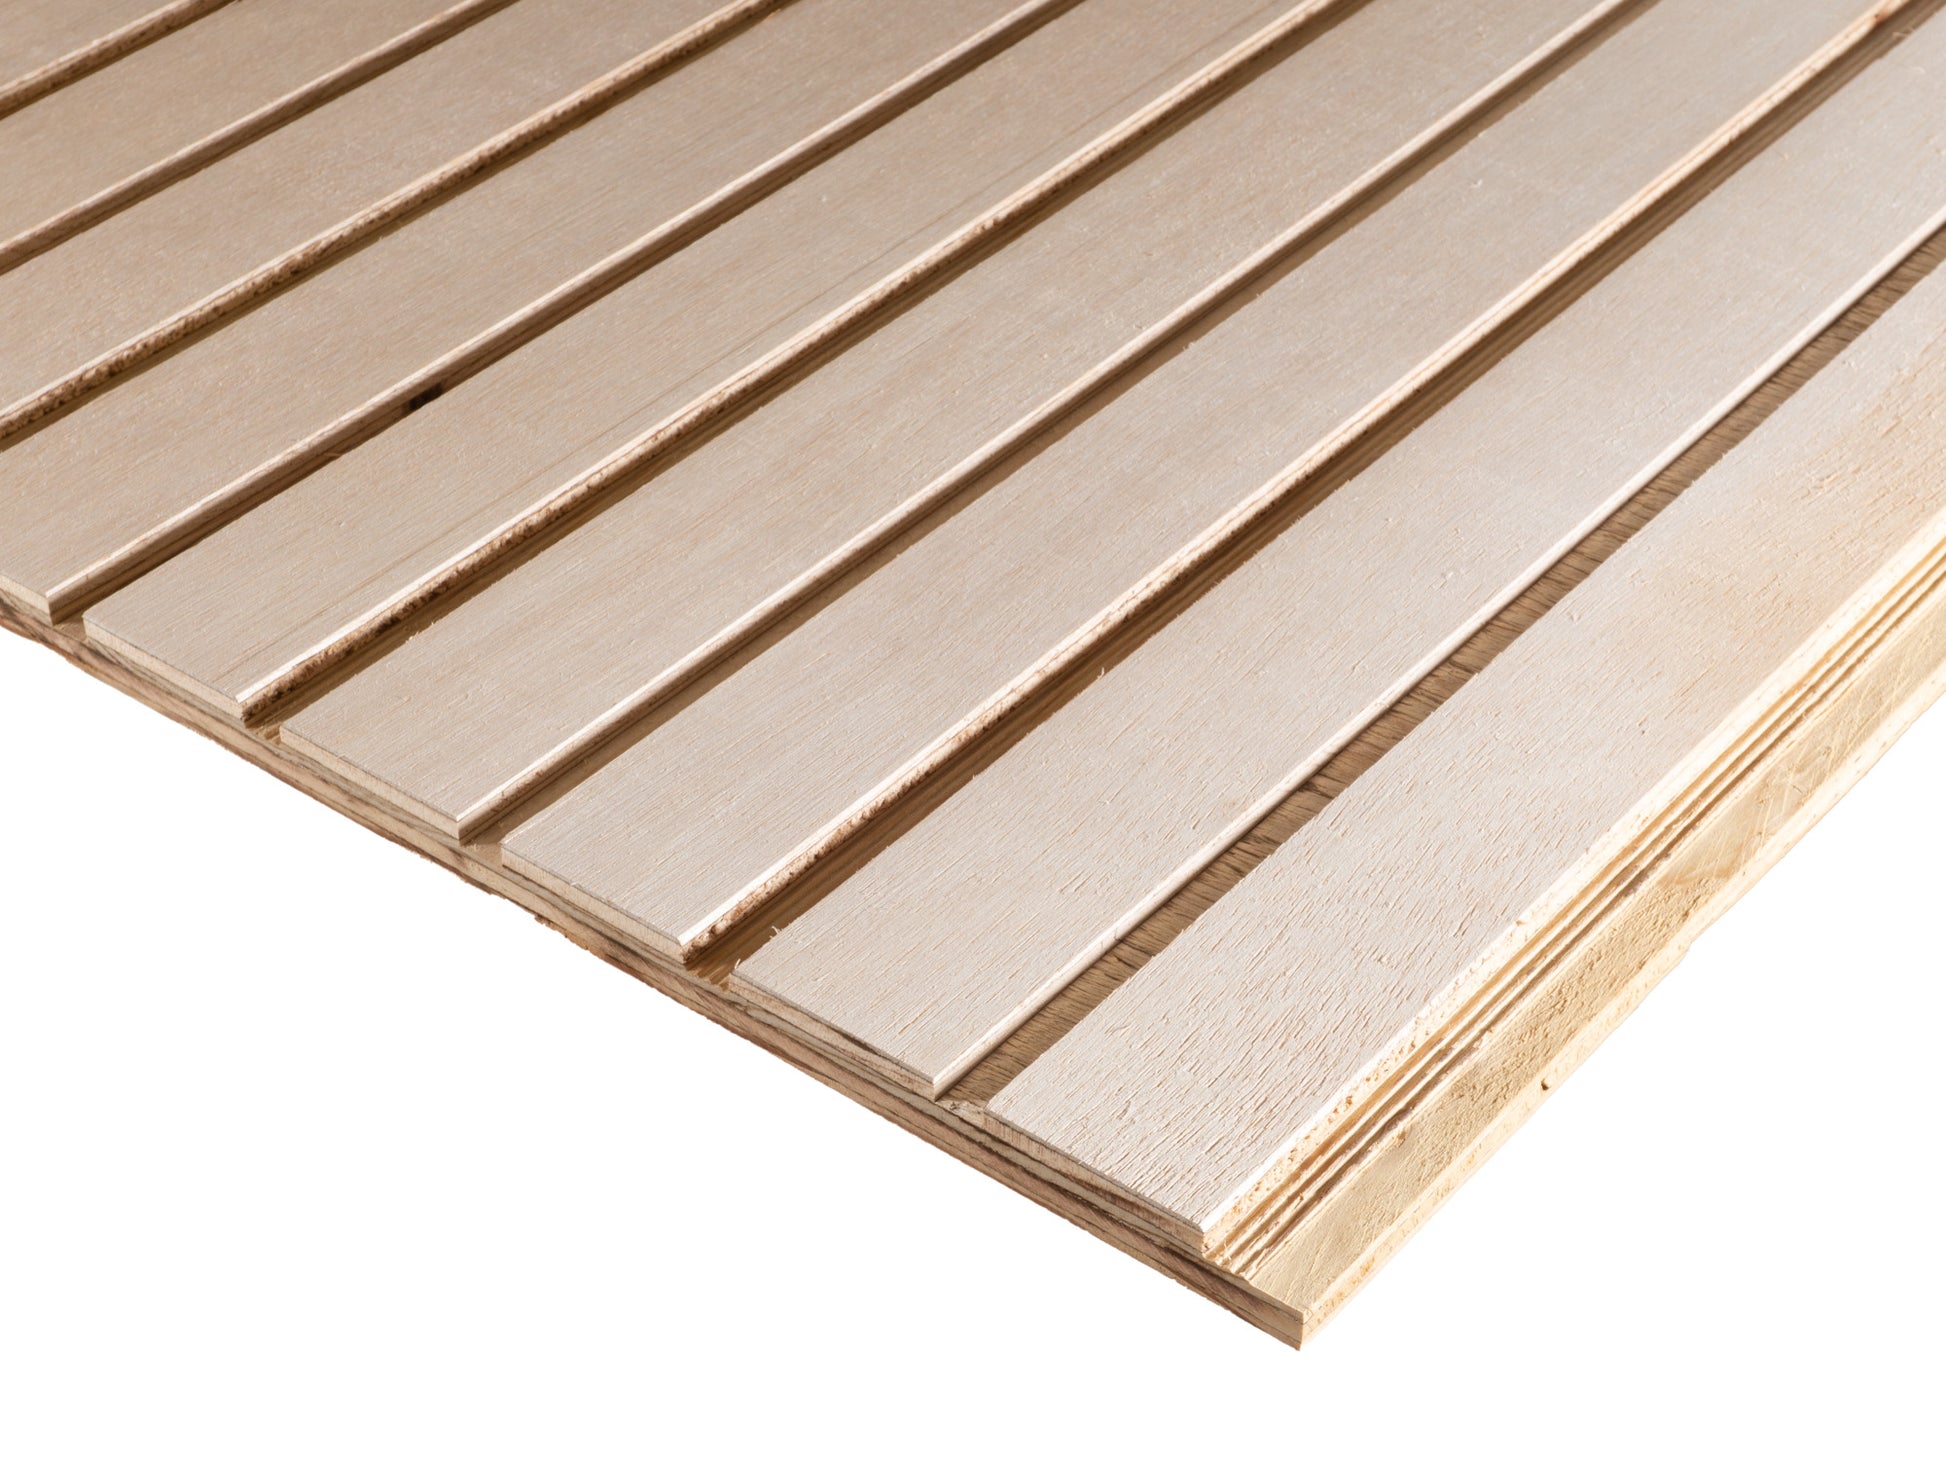 exterior wood paneling sheets